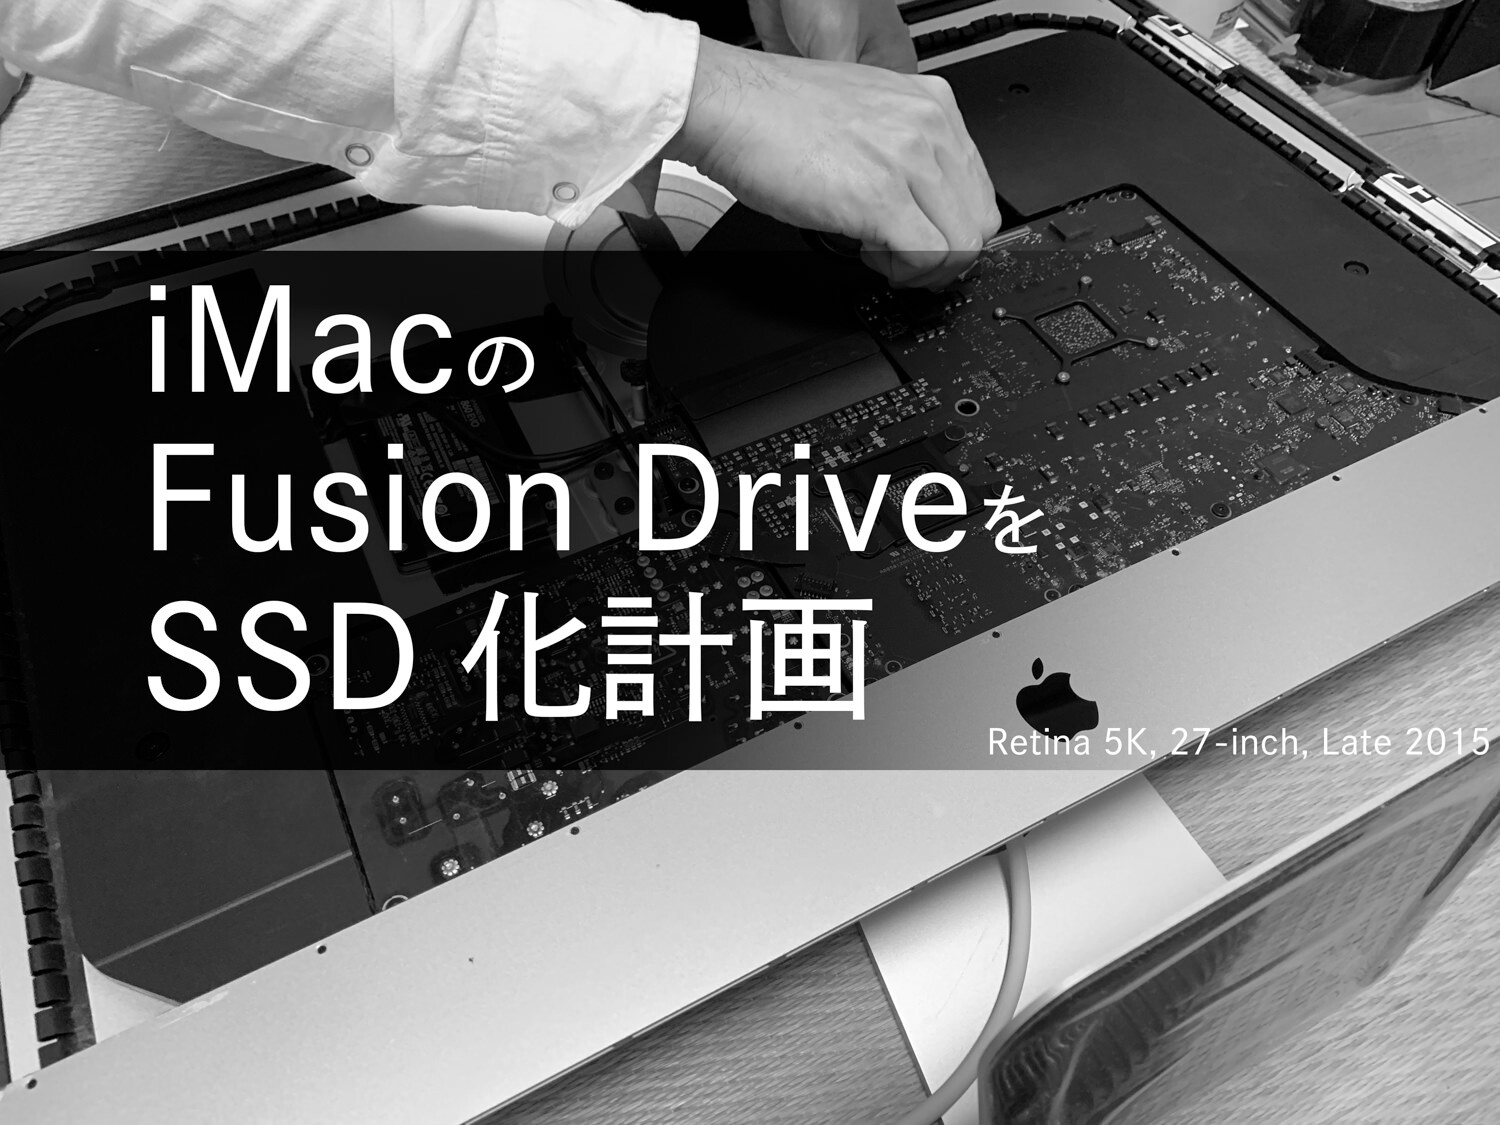 iMacのFusion DriveをSSDに置換した、Retina 5K, 27-inch, Late 2015